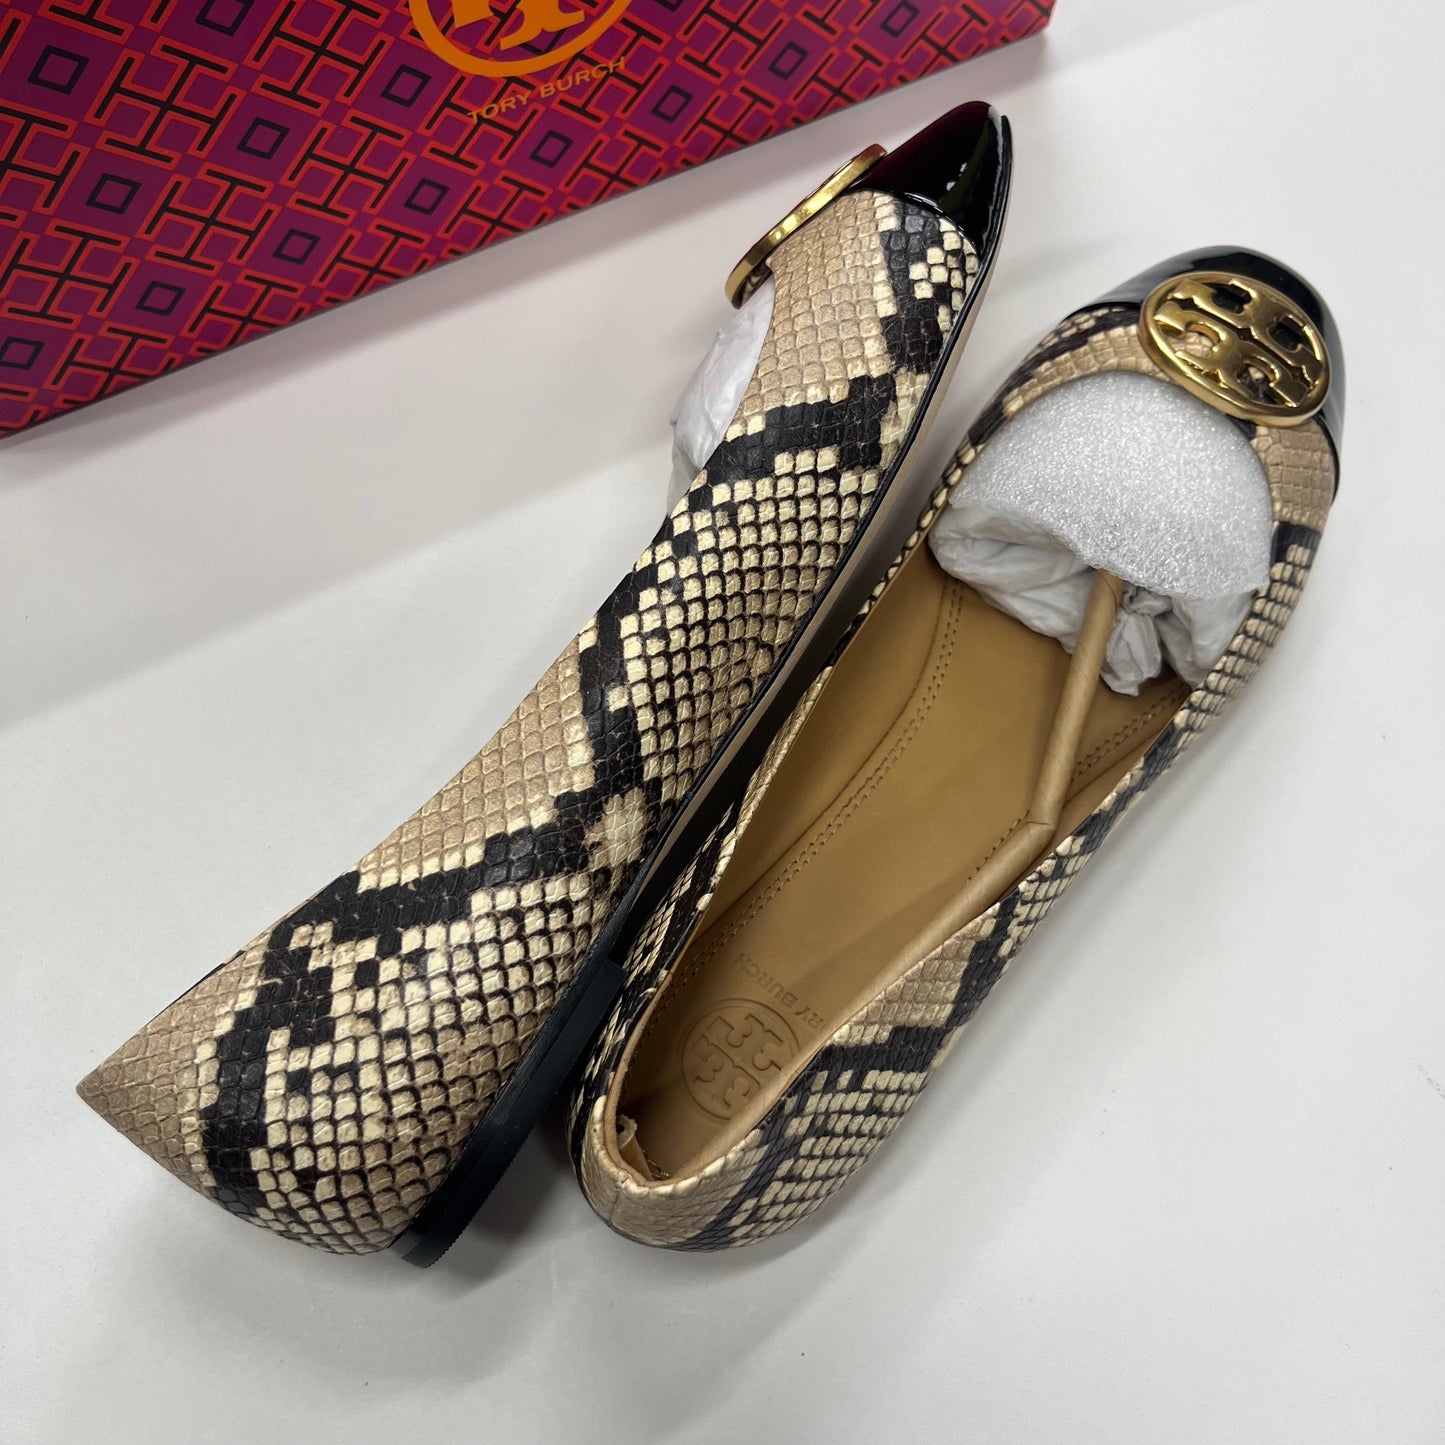 Animal Print Shoes Flats Ballet Tory Burch, Size 9.5